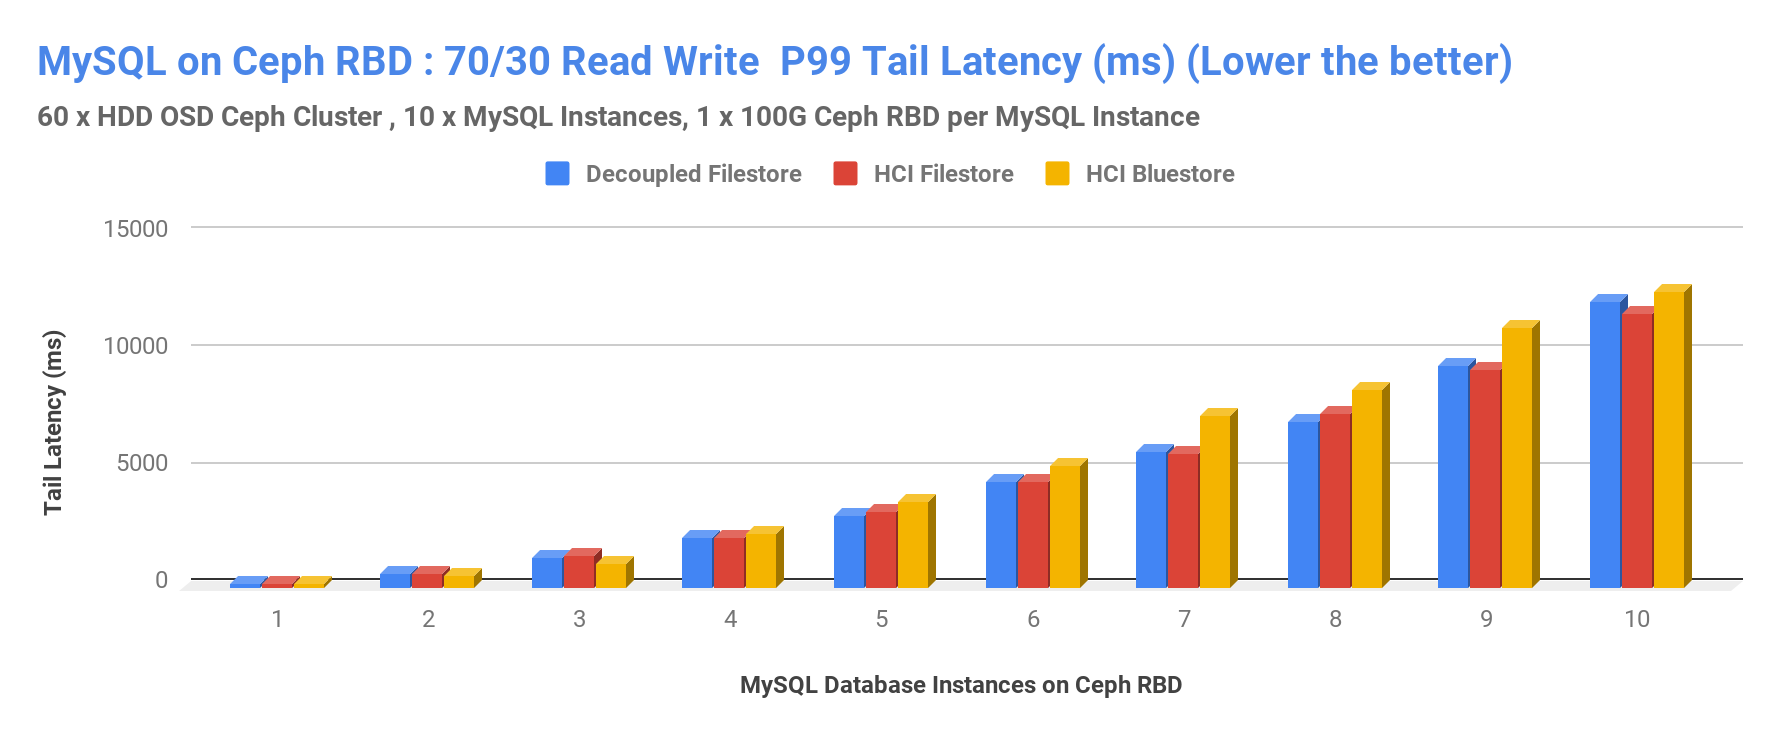 MySQL on Ceph RBD: Write P99 Tail Latency (ms) (Lower the Better)